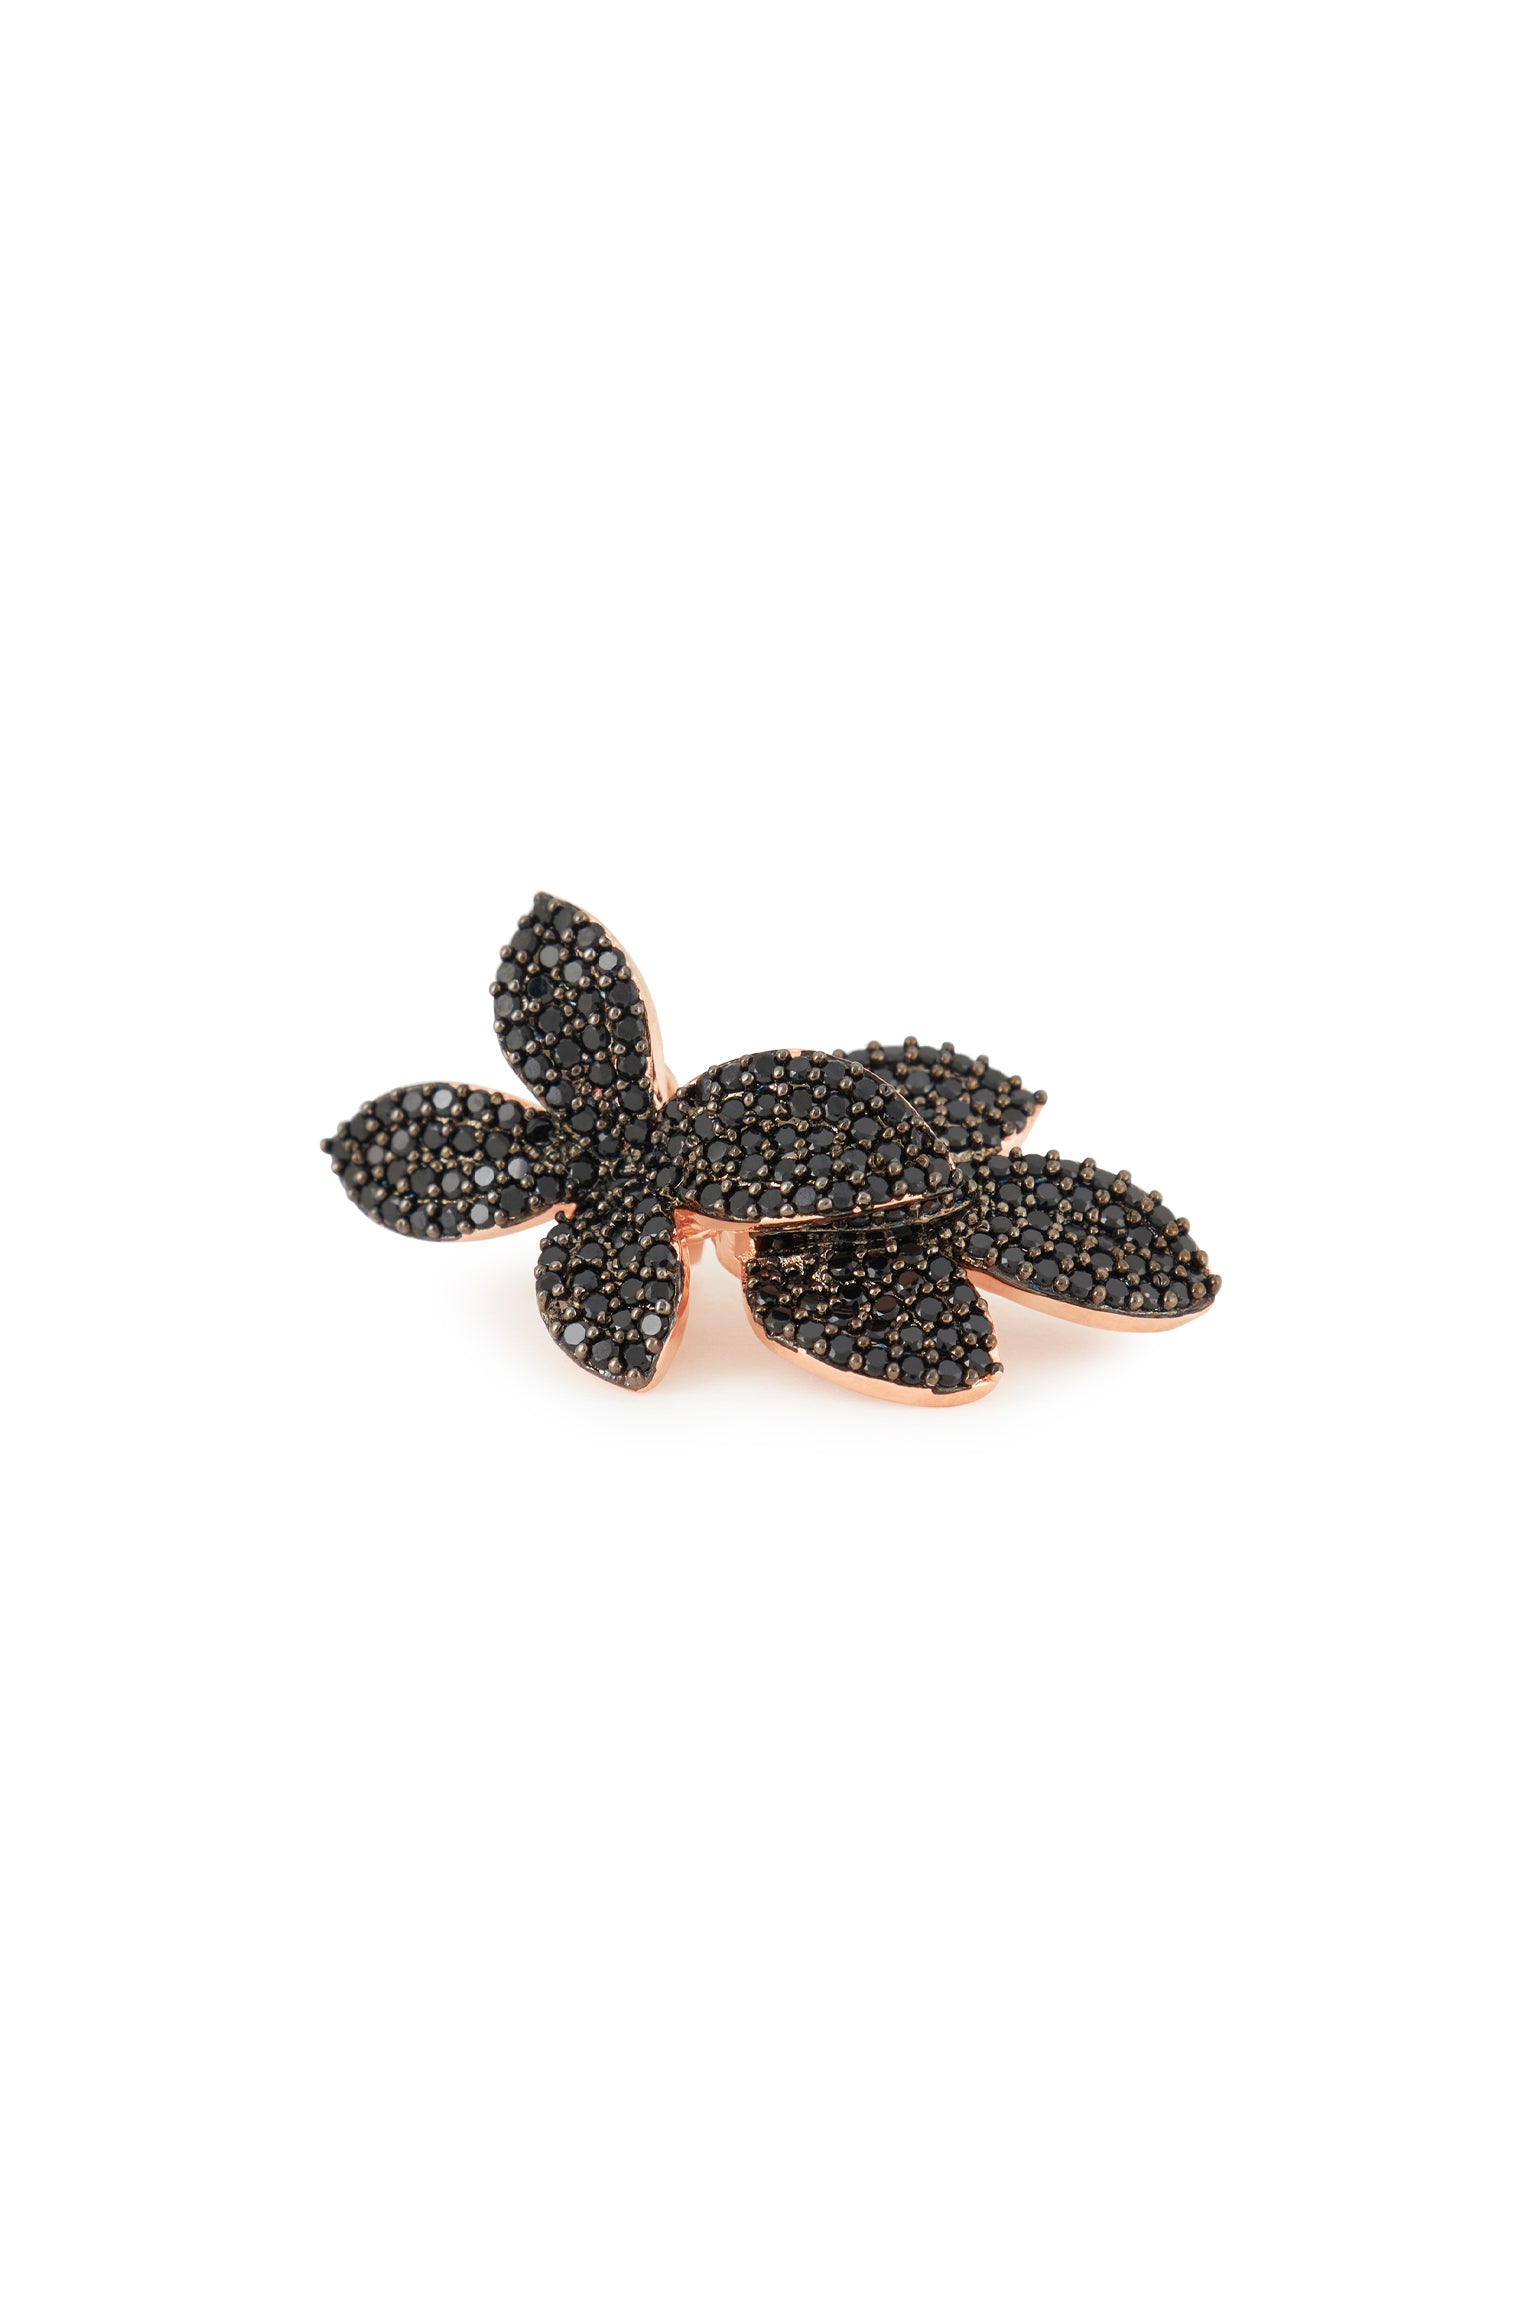 MELUSINA BIJOUX Black Flowers Earrings